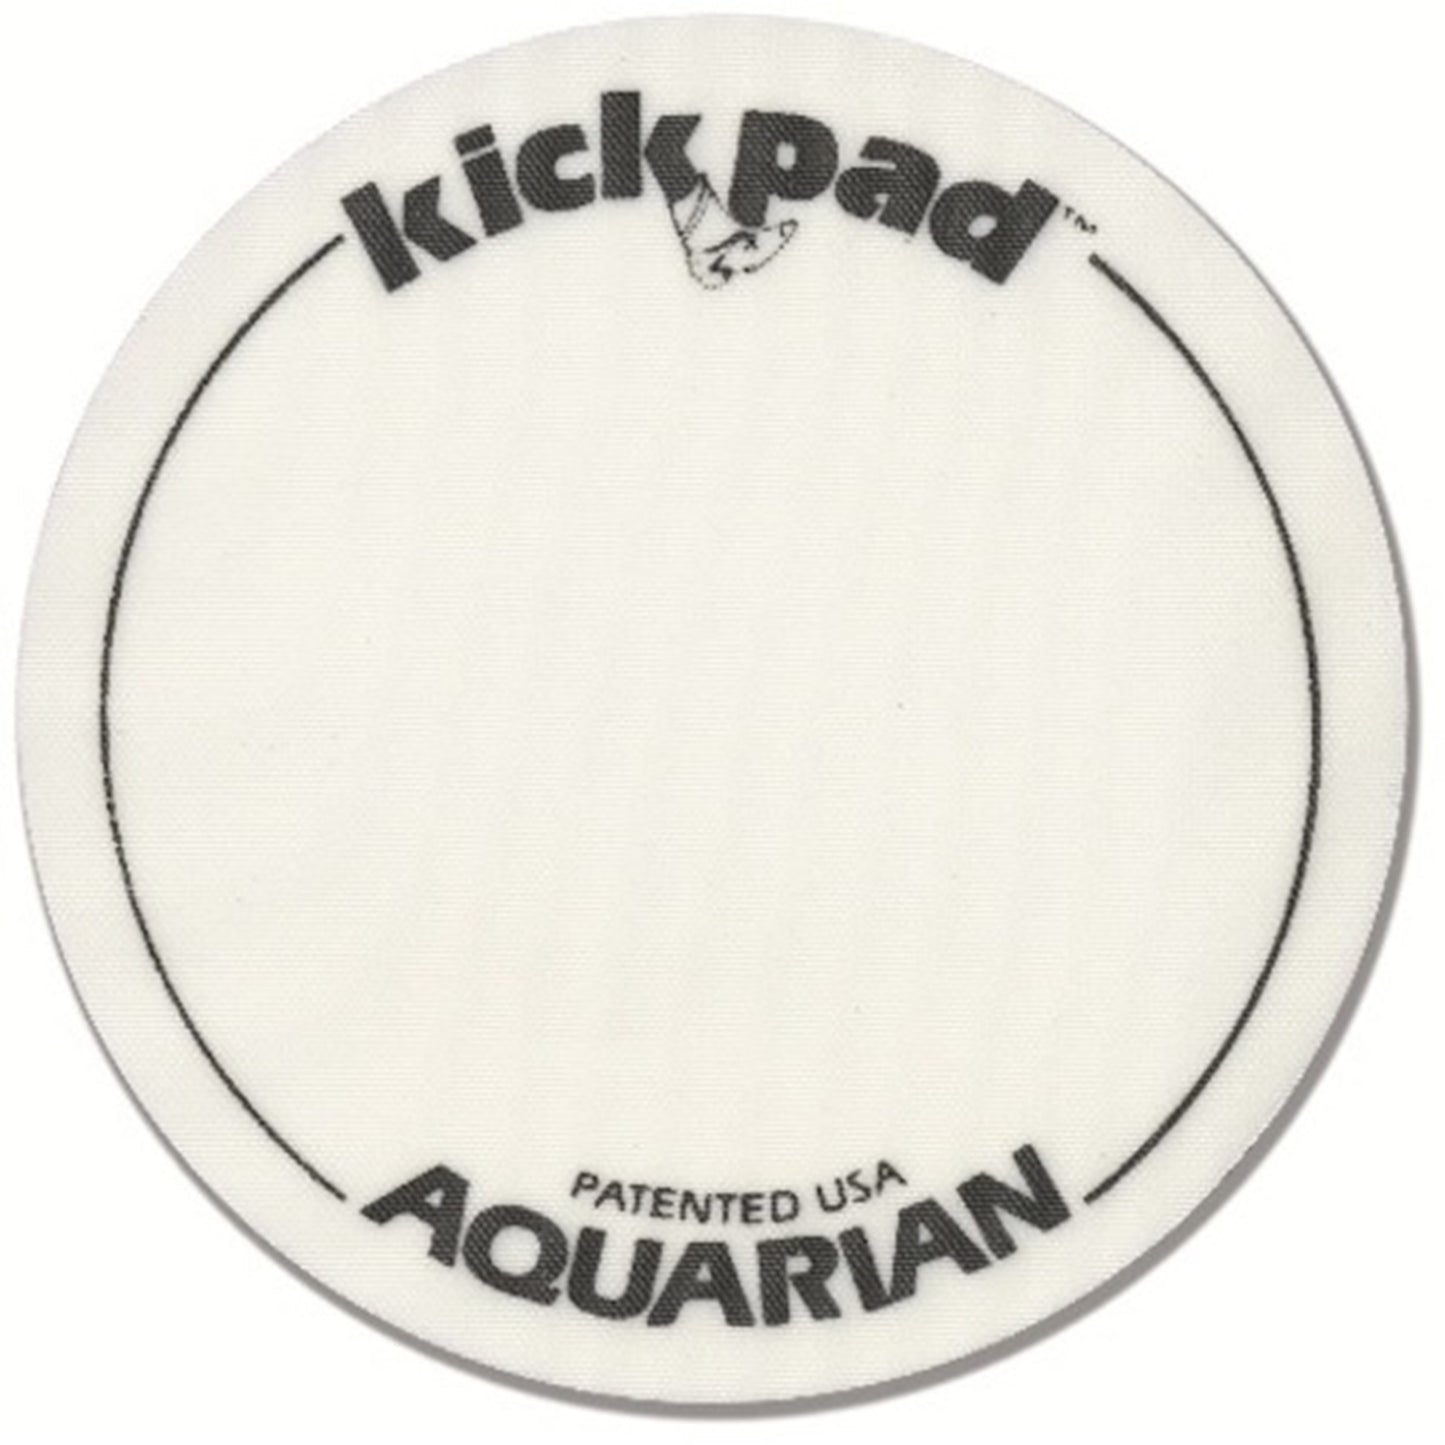 Aquarian KP1 Kick Pad Bass Drum Patch